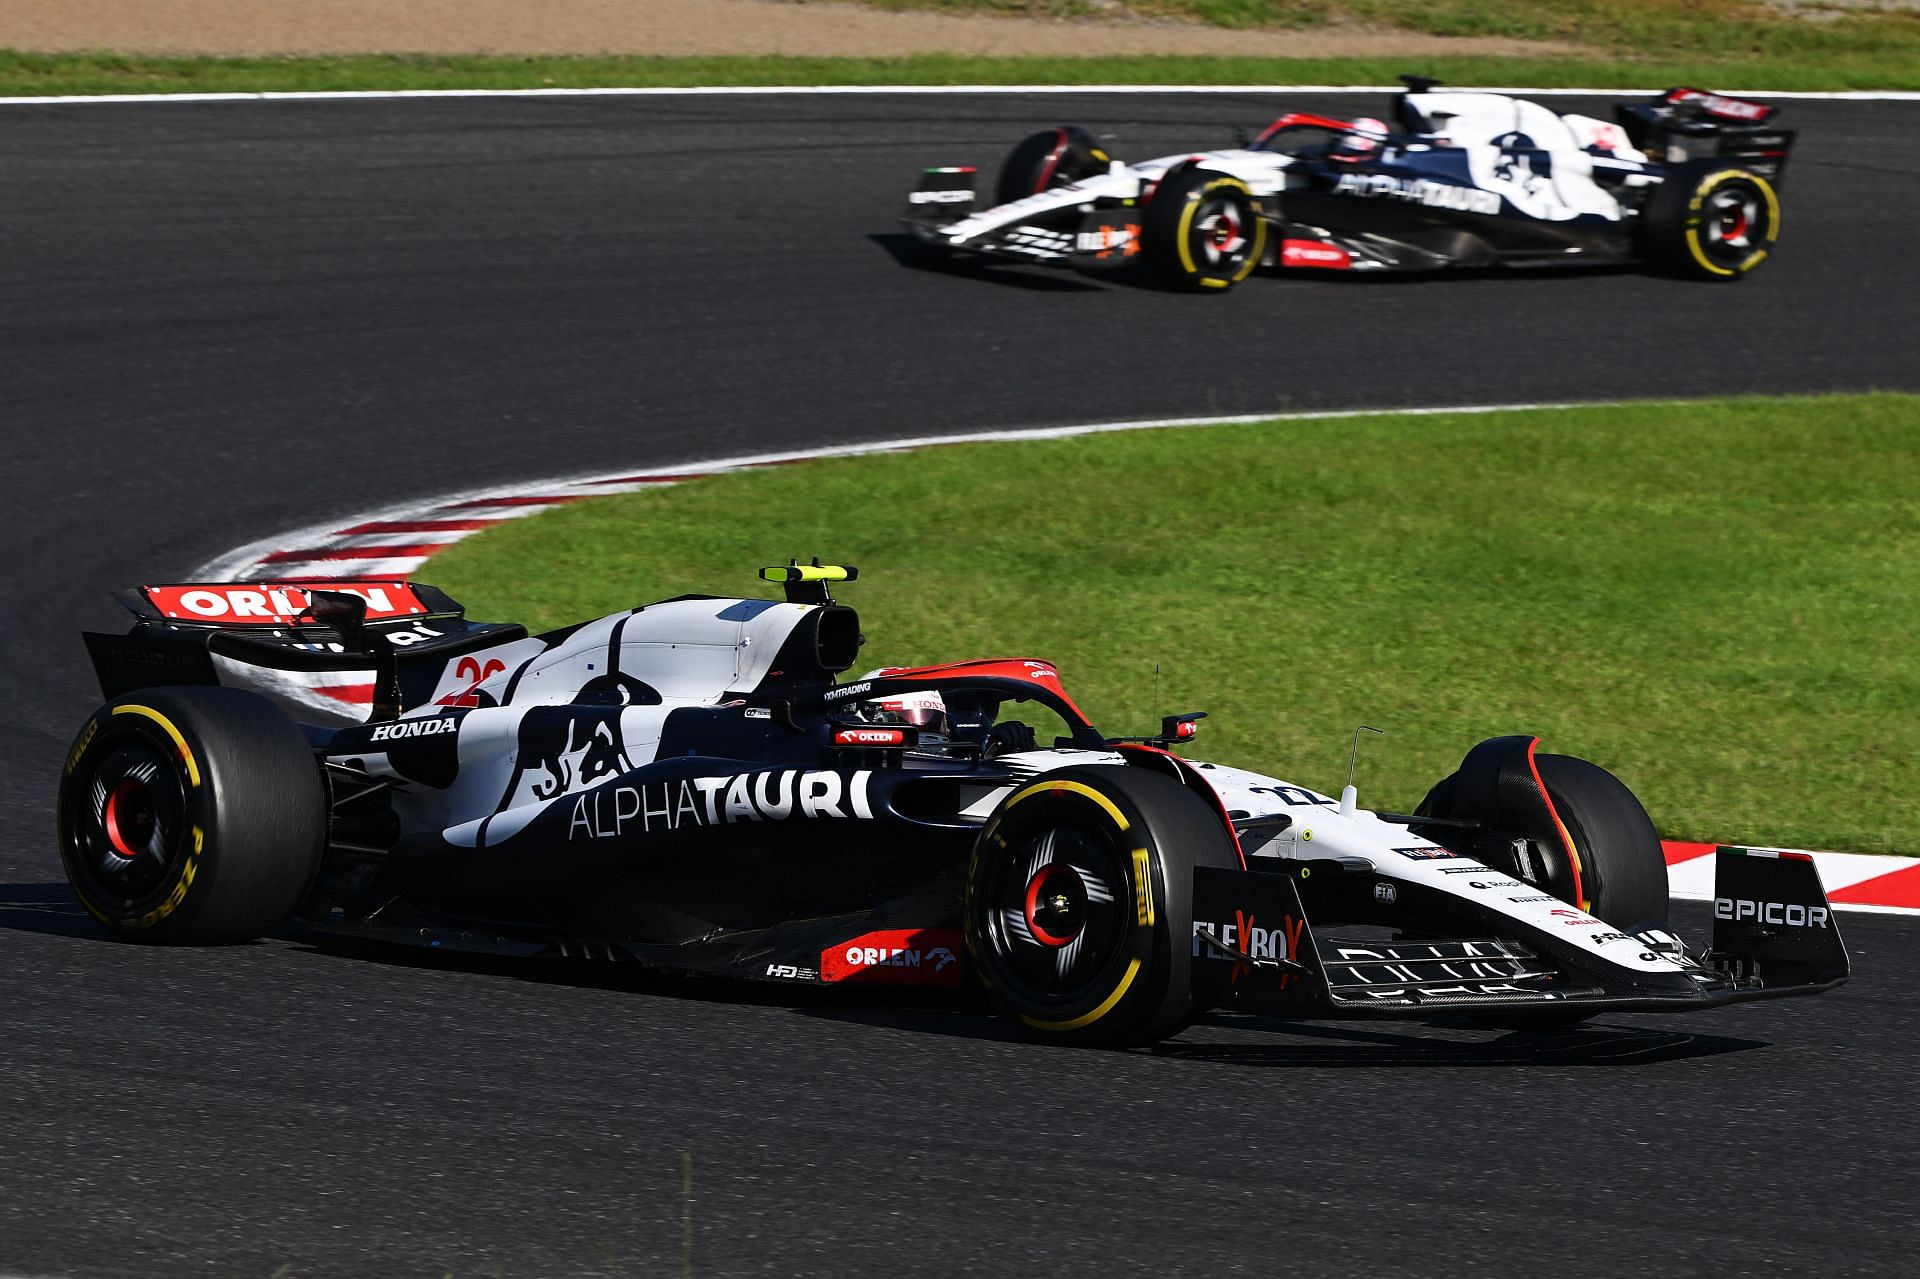 F1 News: AlphaTauri Bids Fans Farewell Ahead Of Rebrand With